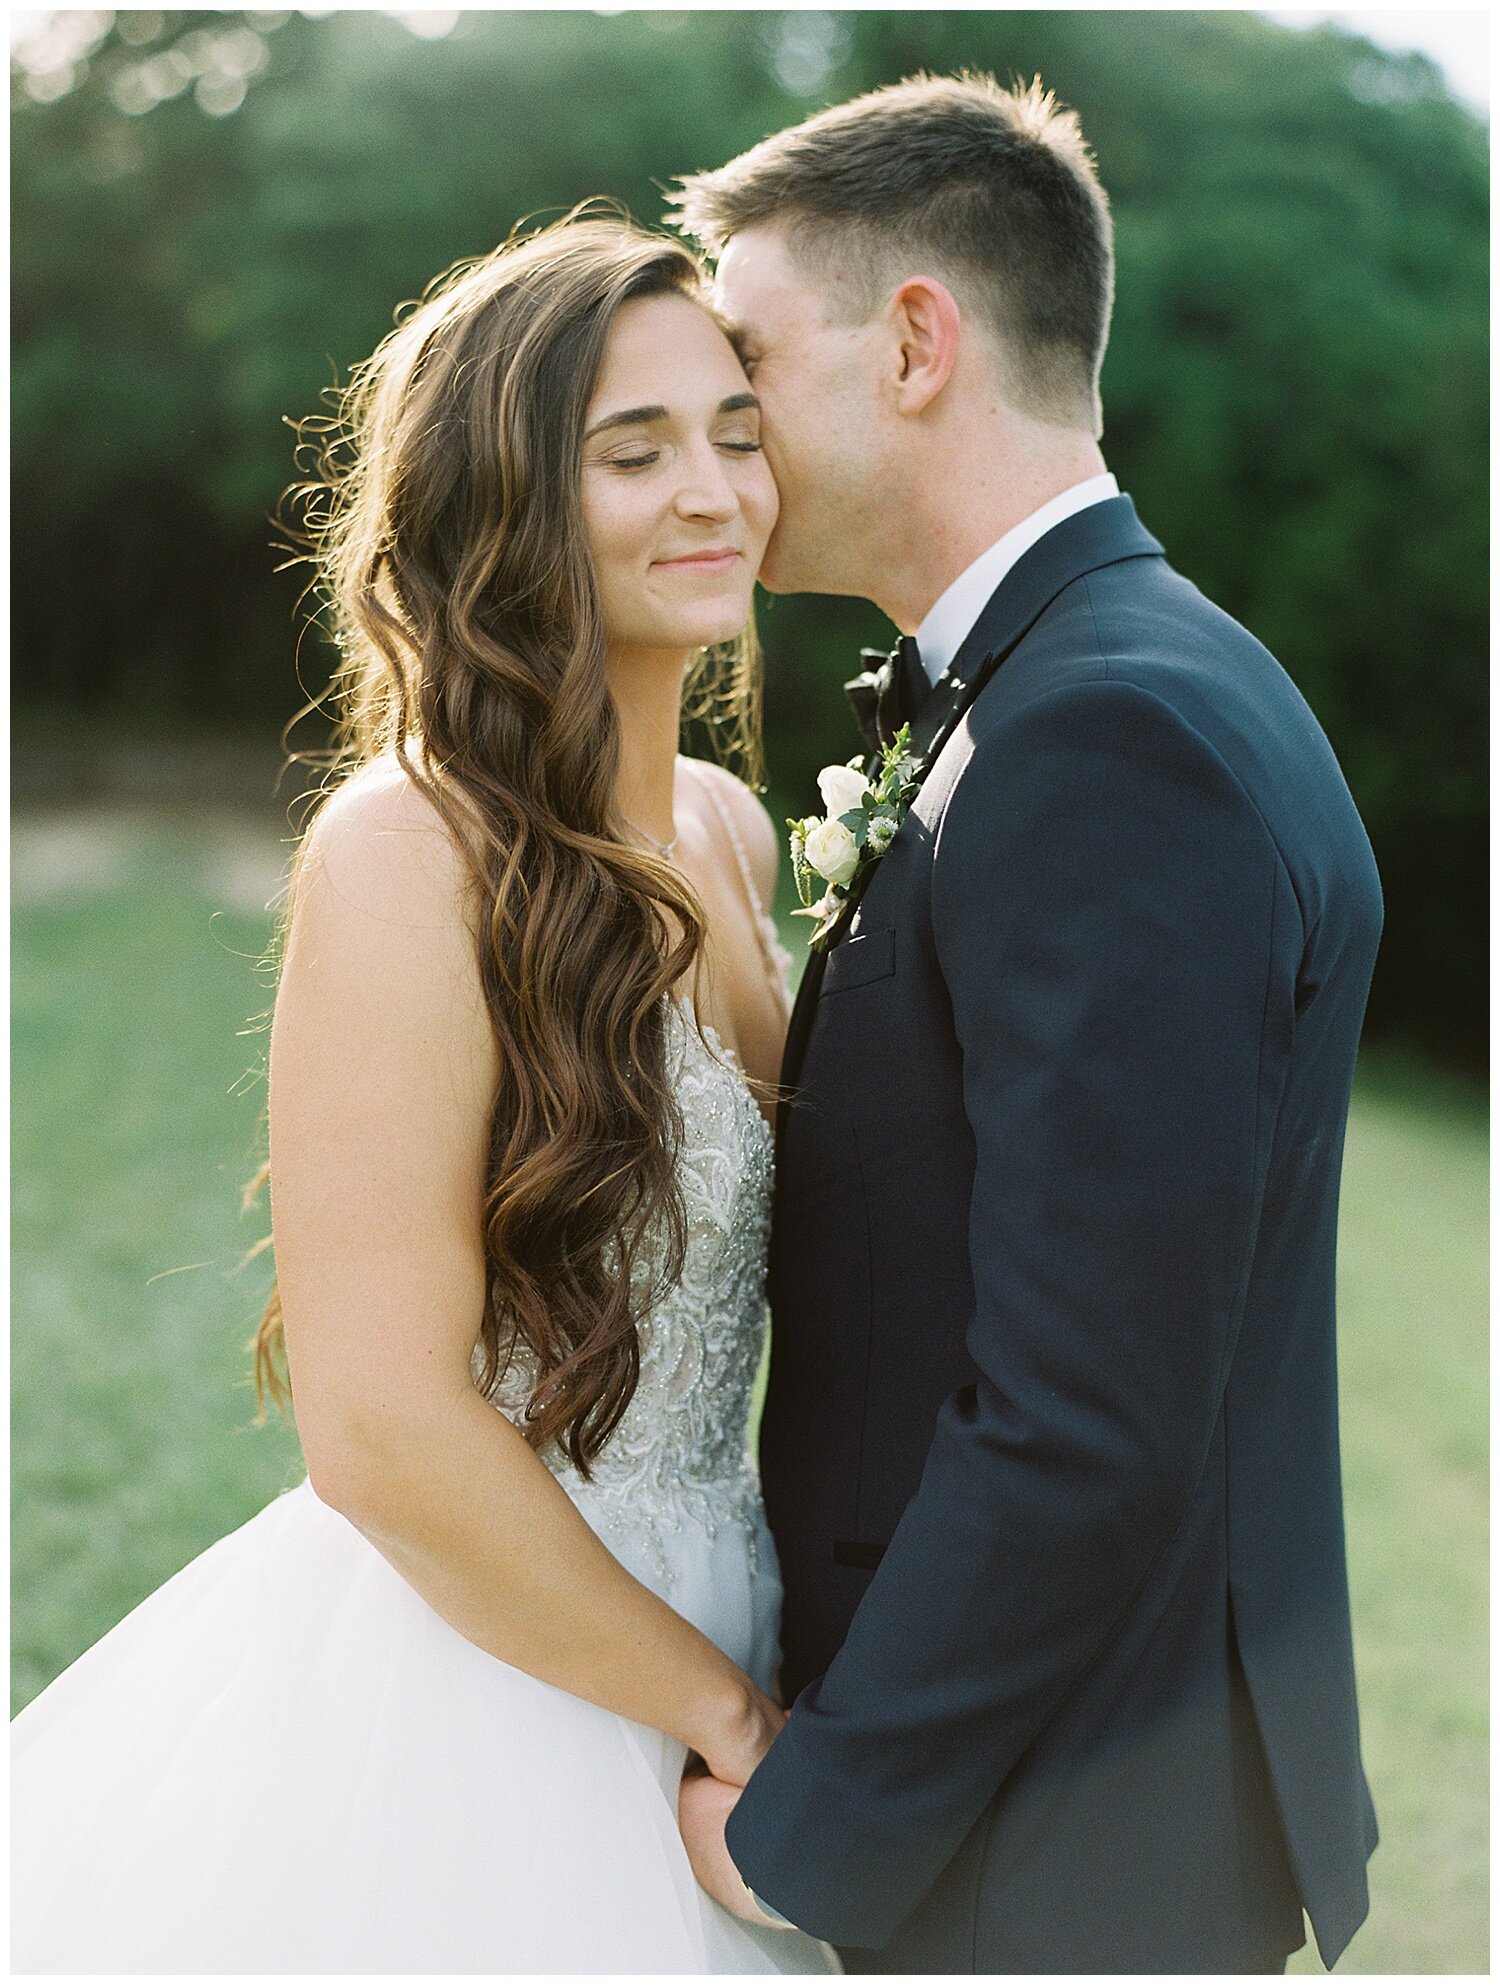 Kendall Point - Boerne TX Wedding Photography34.jpg